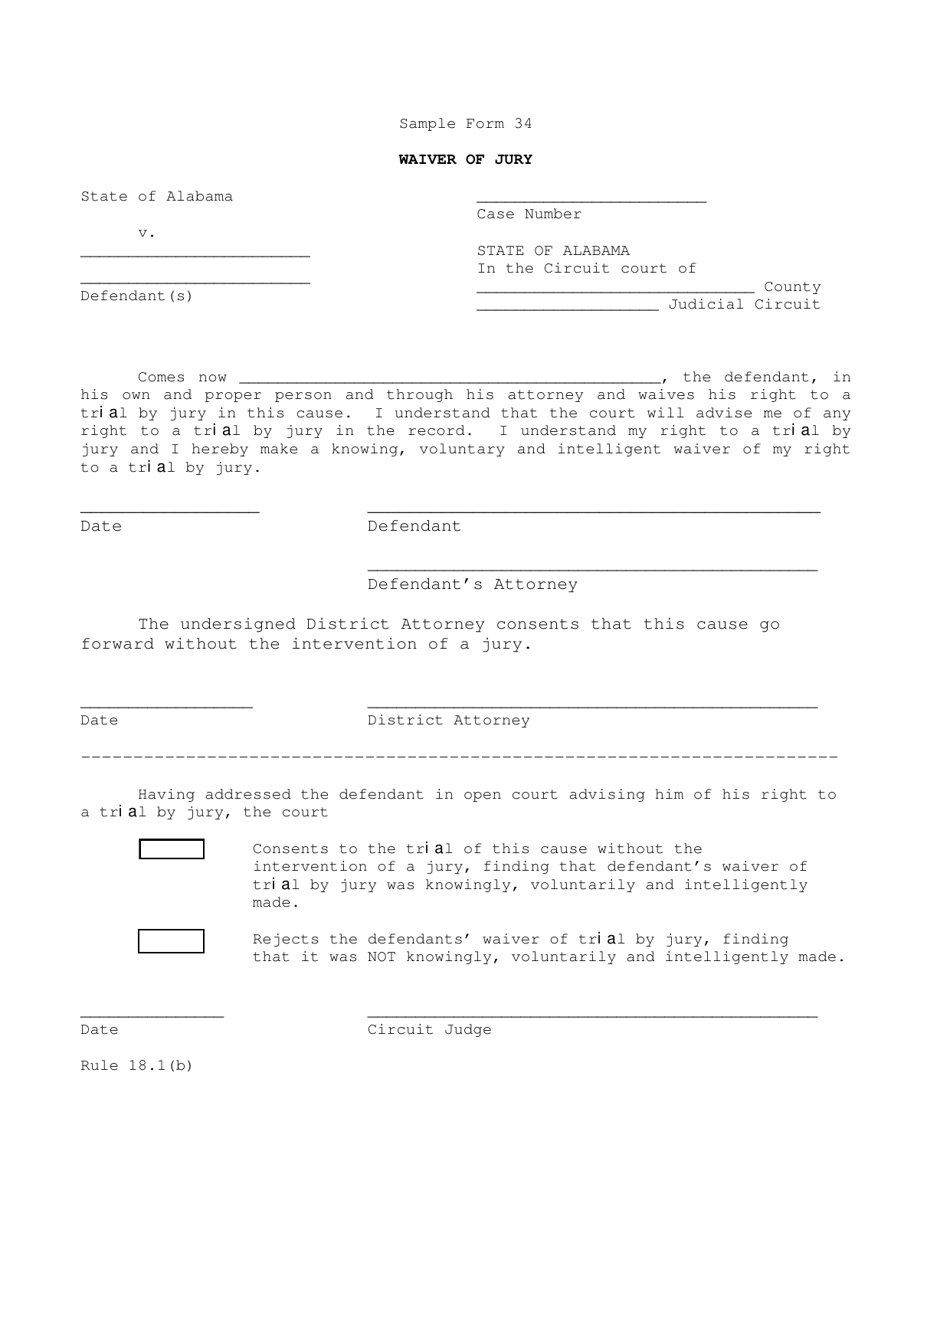 Sample Form 34 Waiver of Jury - Alabama, Page 1